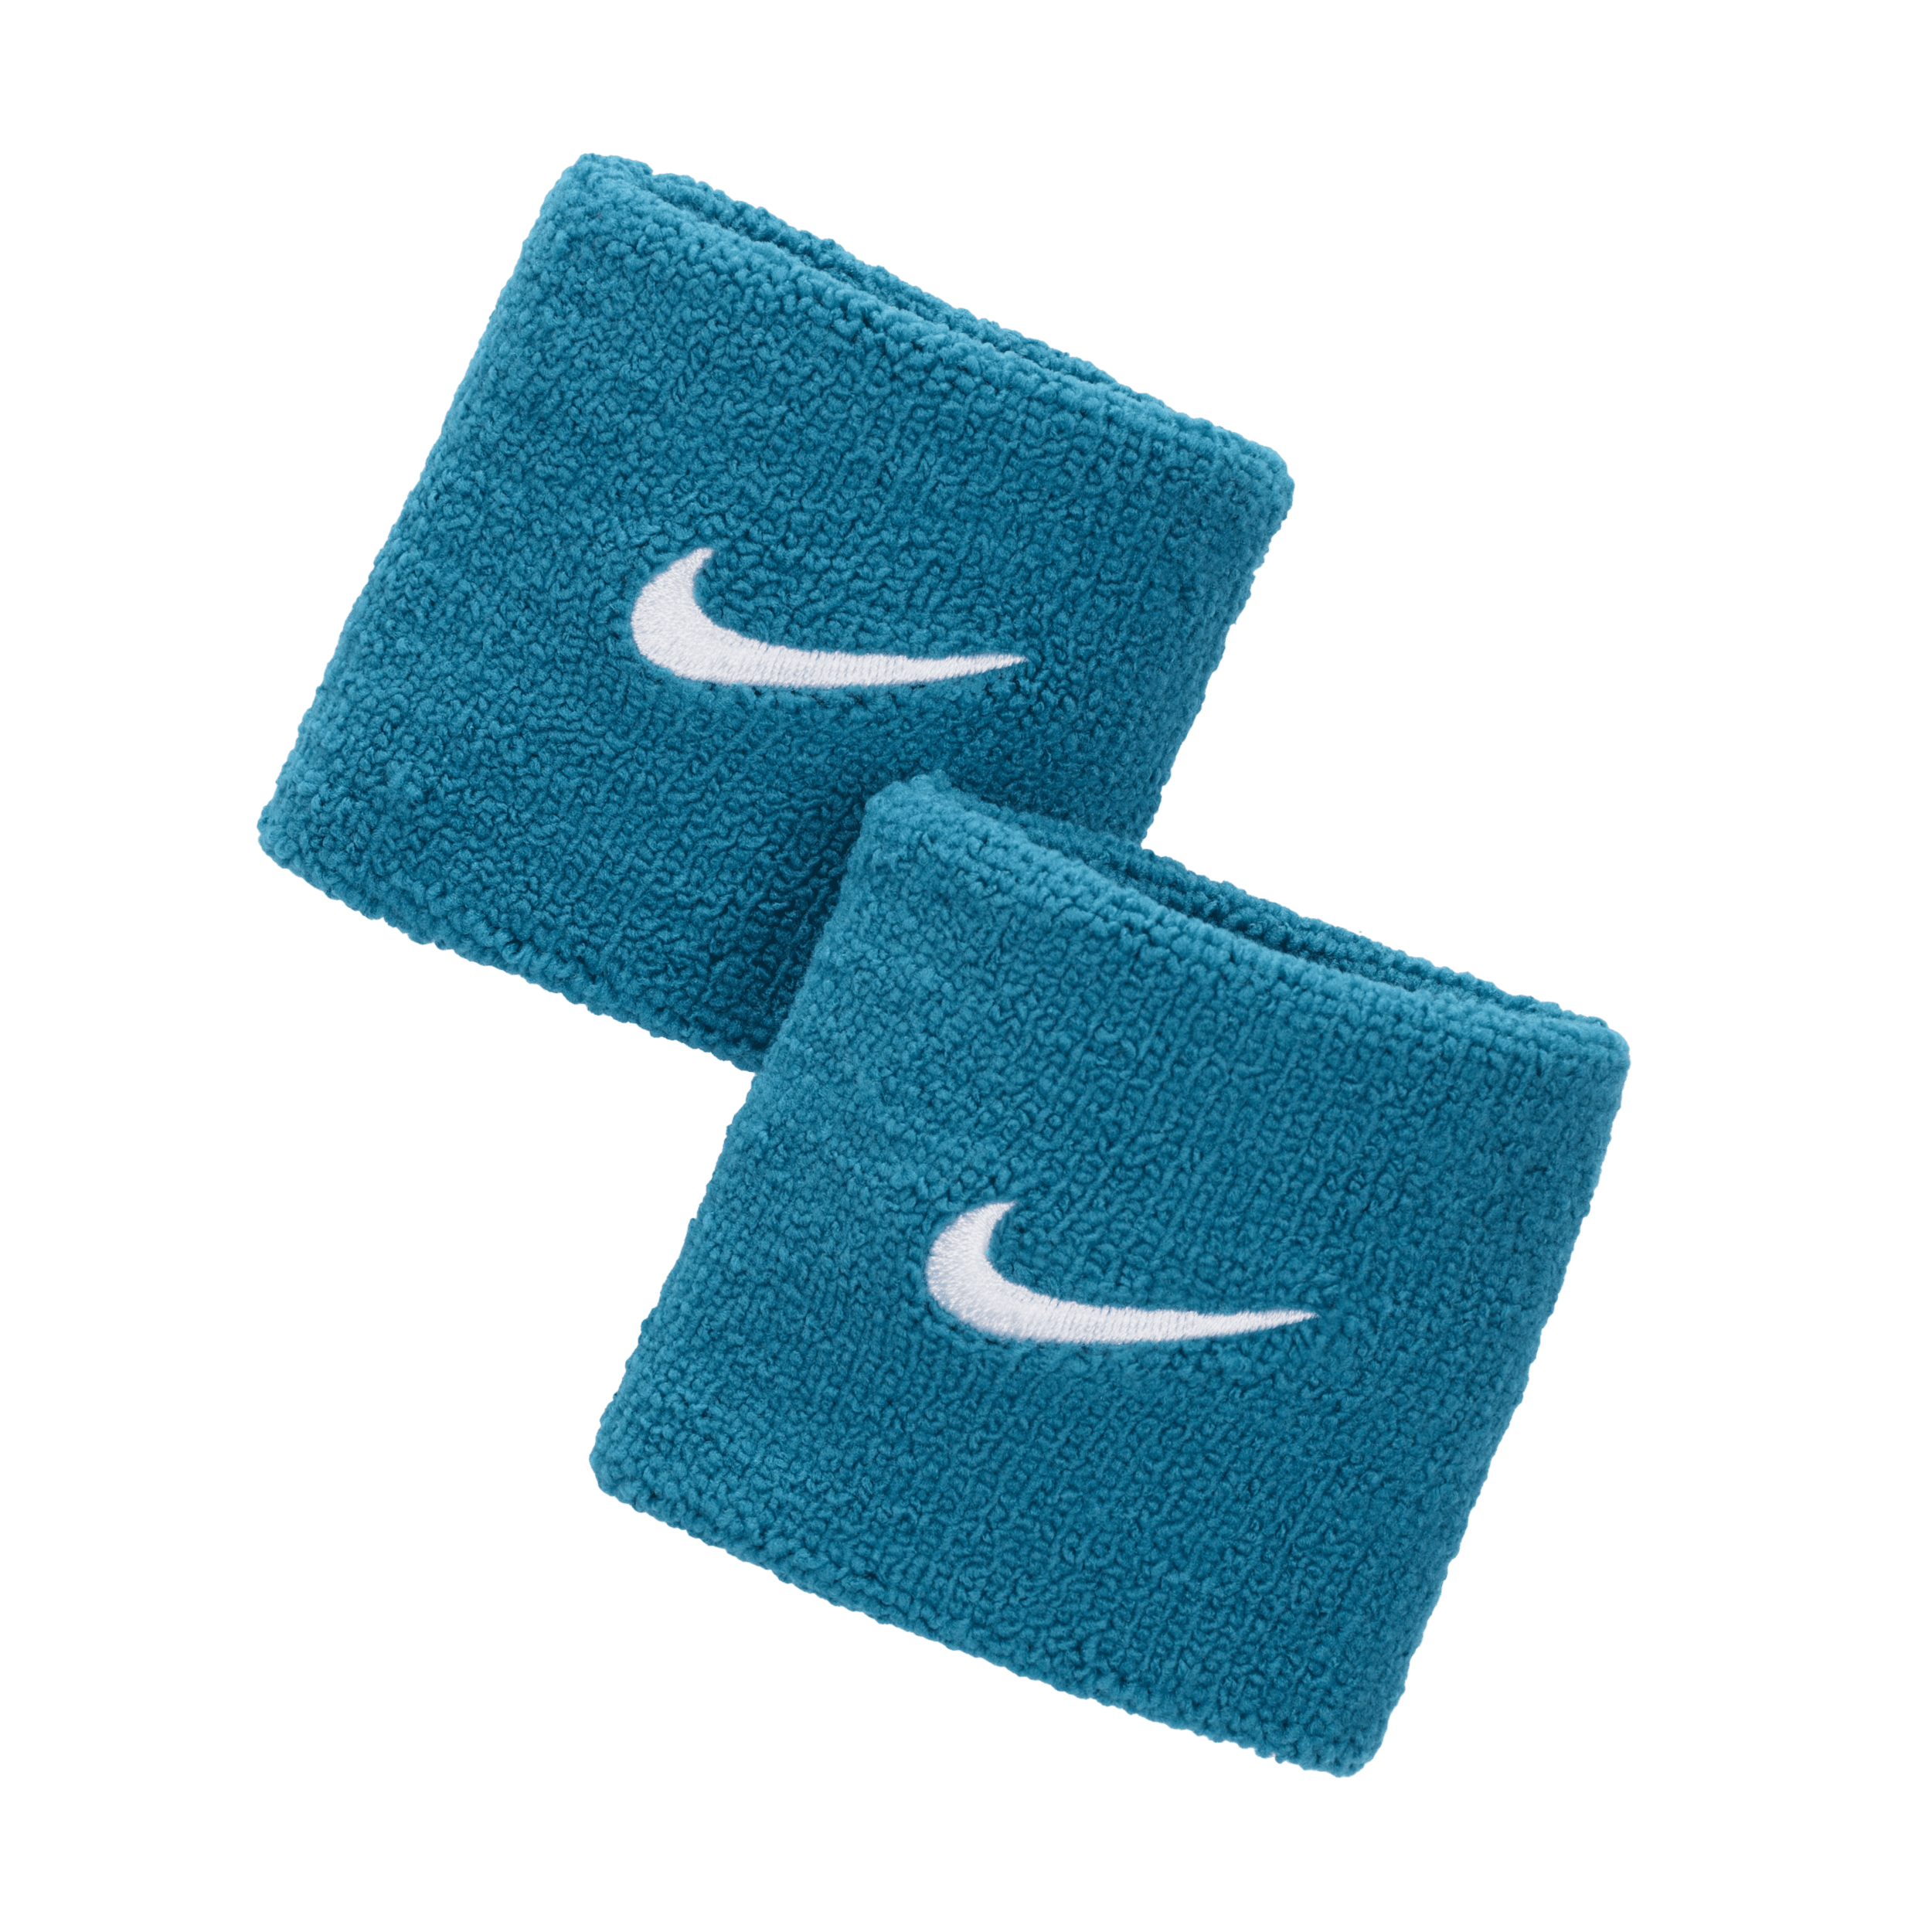 Nike Premier Muñequeras de tenis - Azul